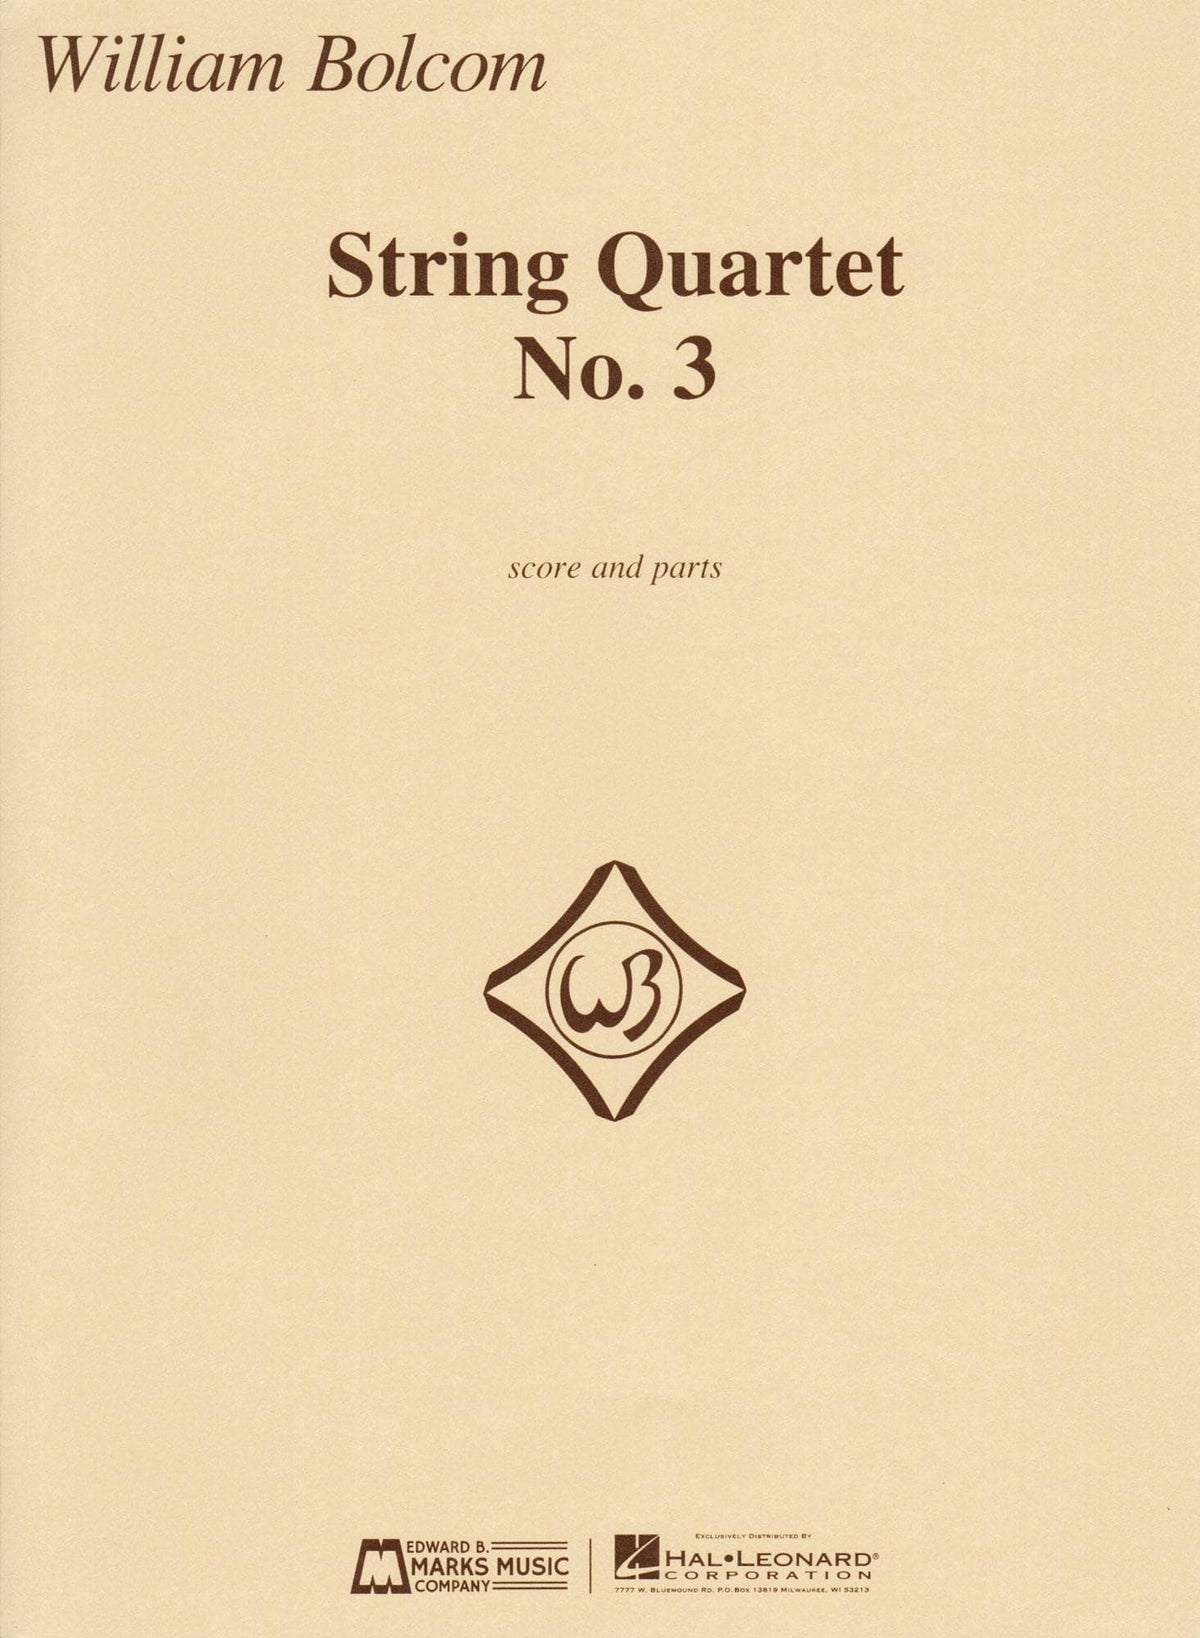 Bolcom, William - String Quartet No. 3 - Score and Parts - Edward B. Marks Music Company